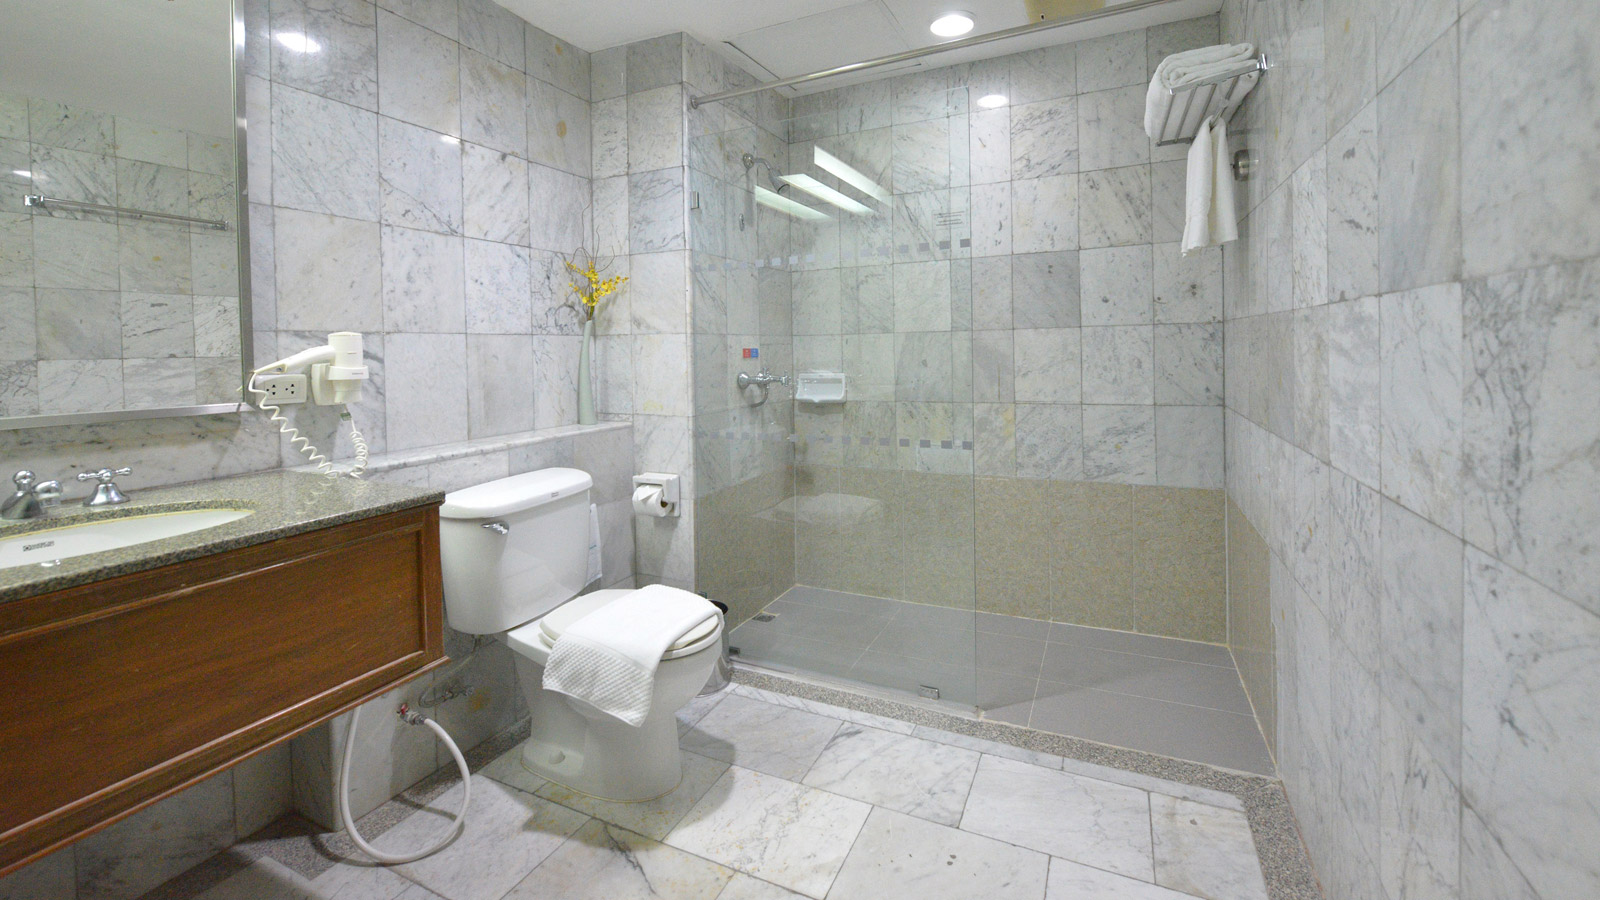 Grand Deluxe - Bathroom at Loei Palace Hotel - โรงแรม เลย พาเลซ